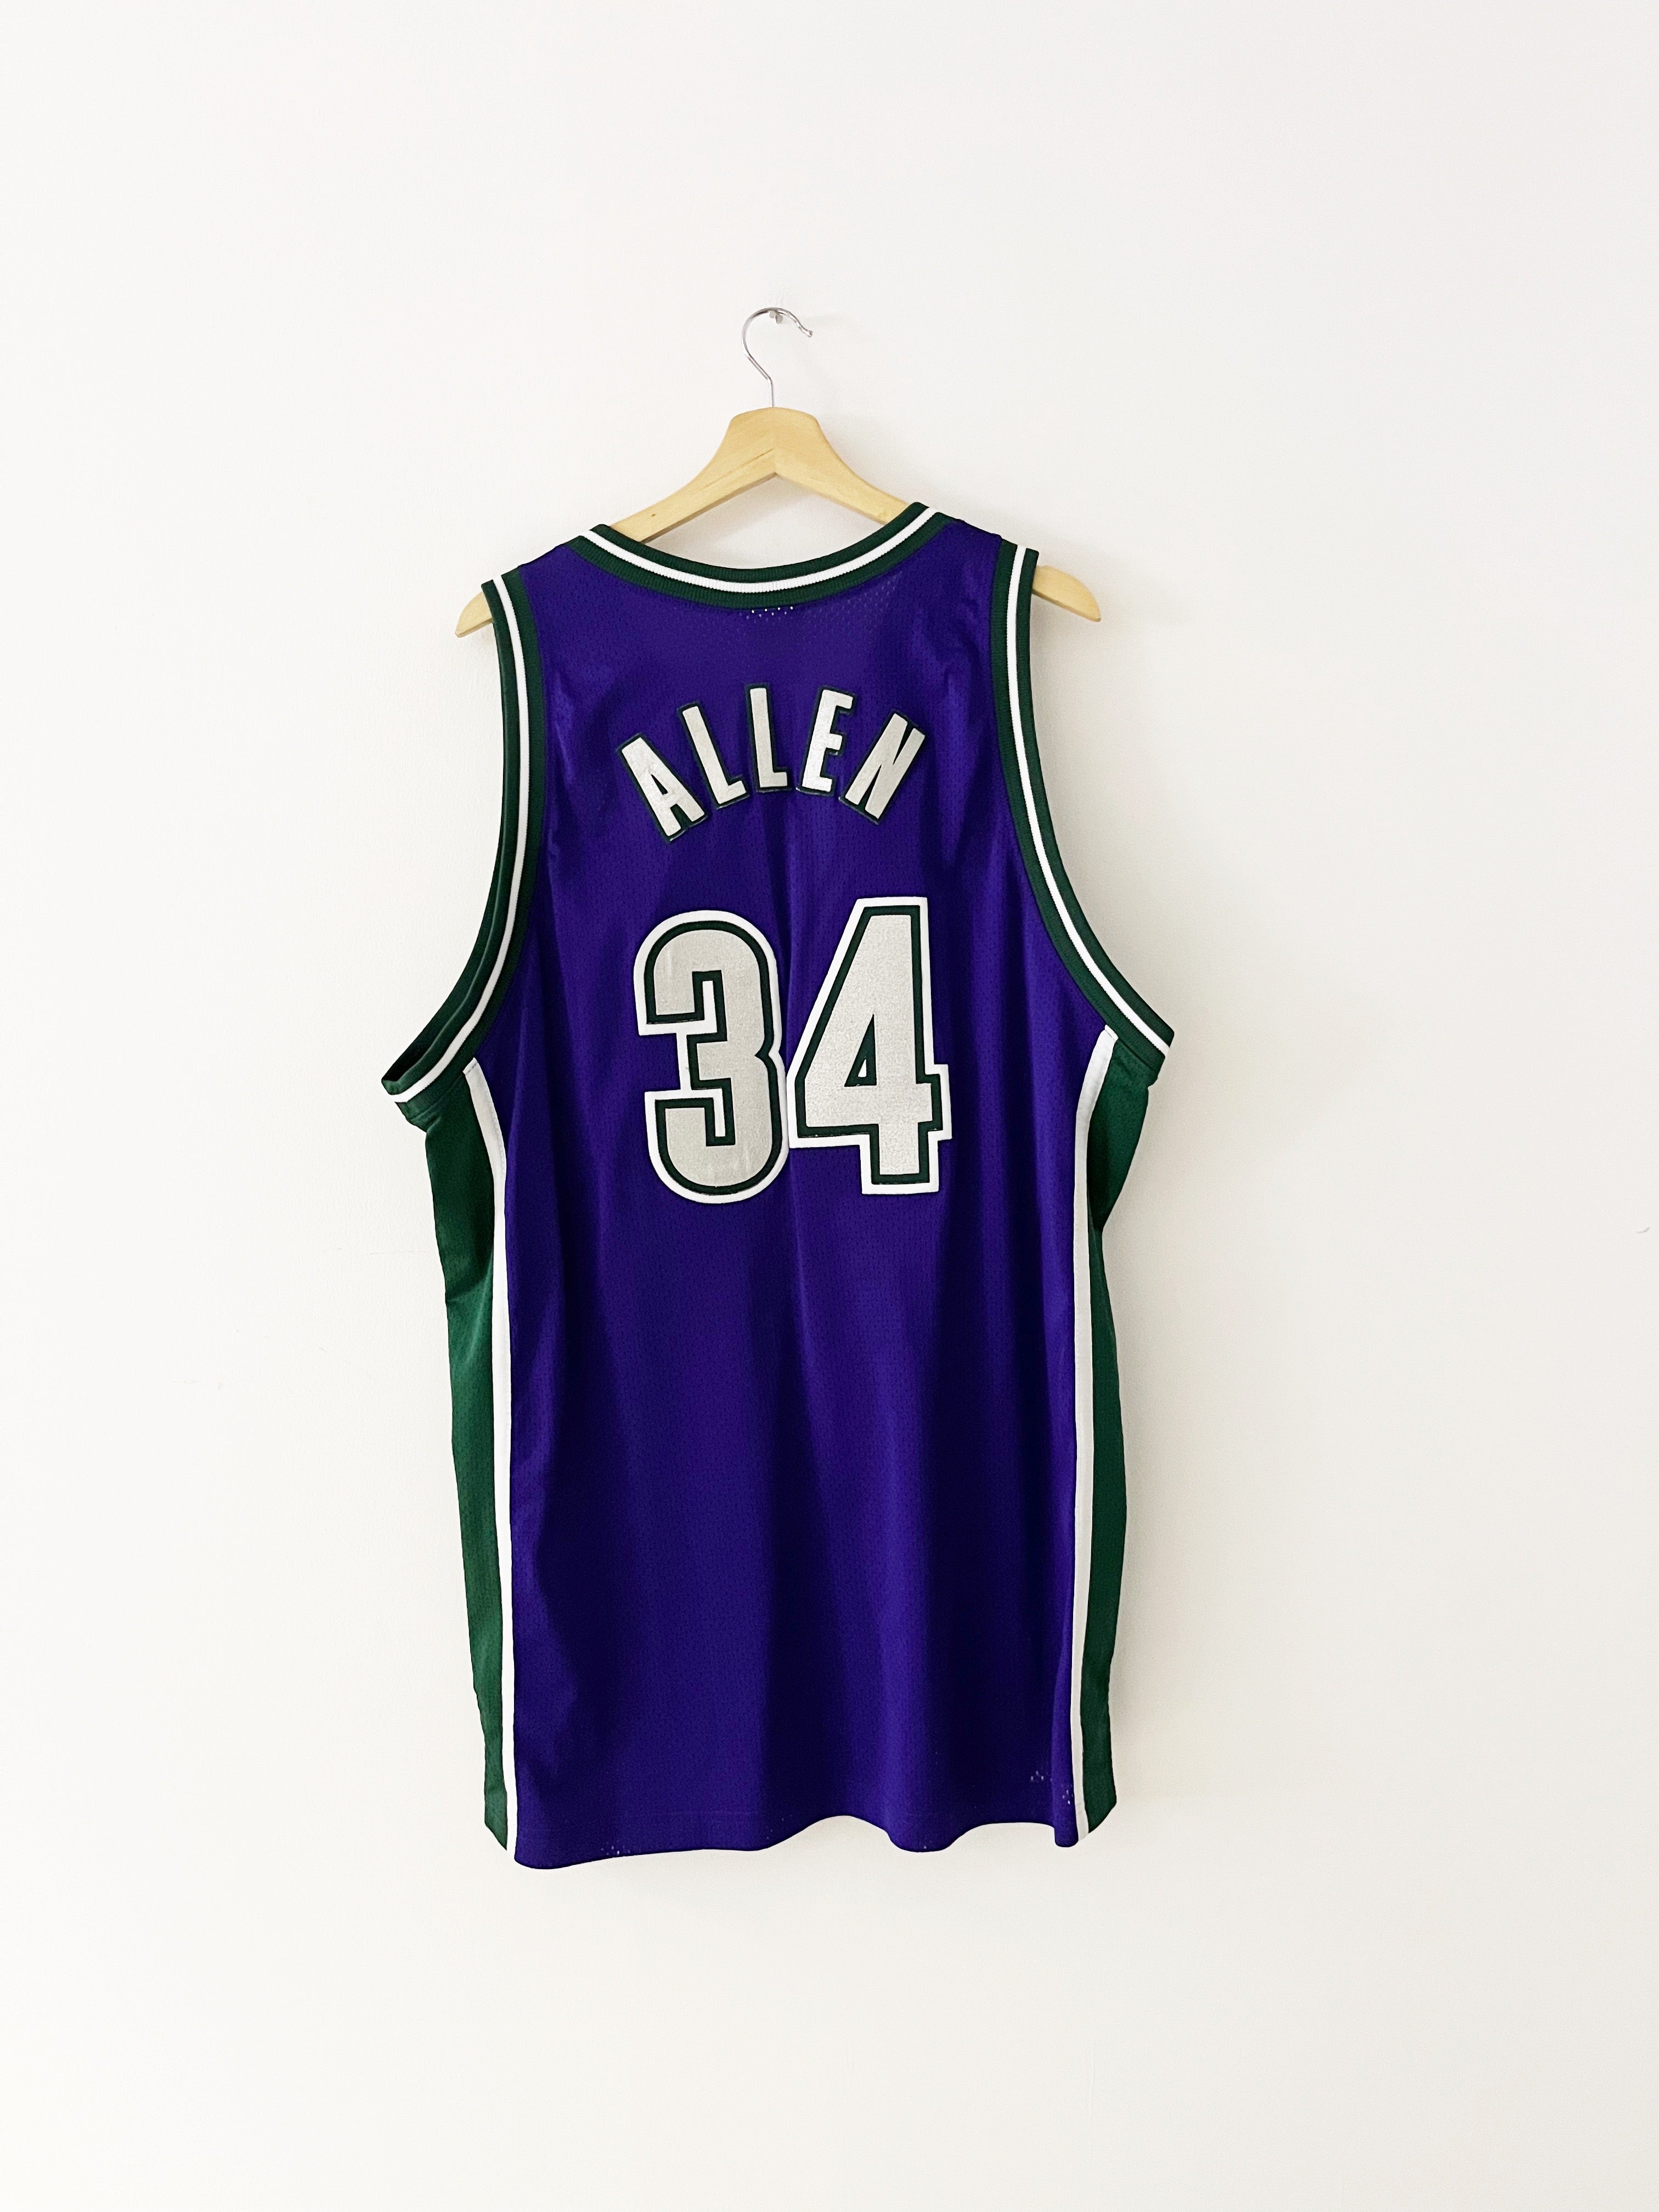 1997-99 Milwaukee Bucks Reebok Road Jersey Allen #34 (XL) 9/10